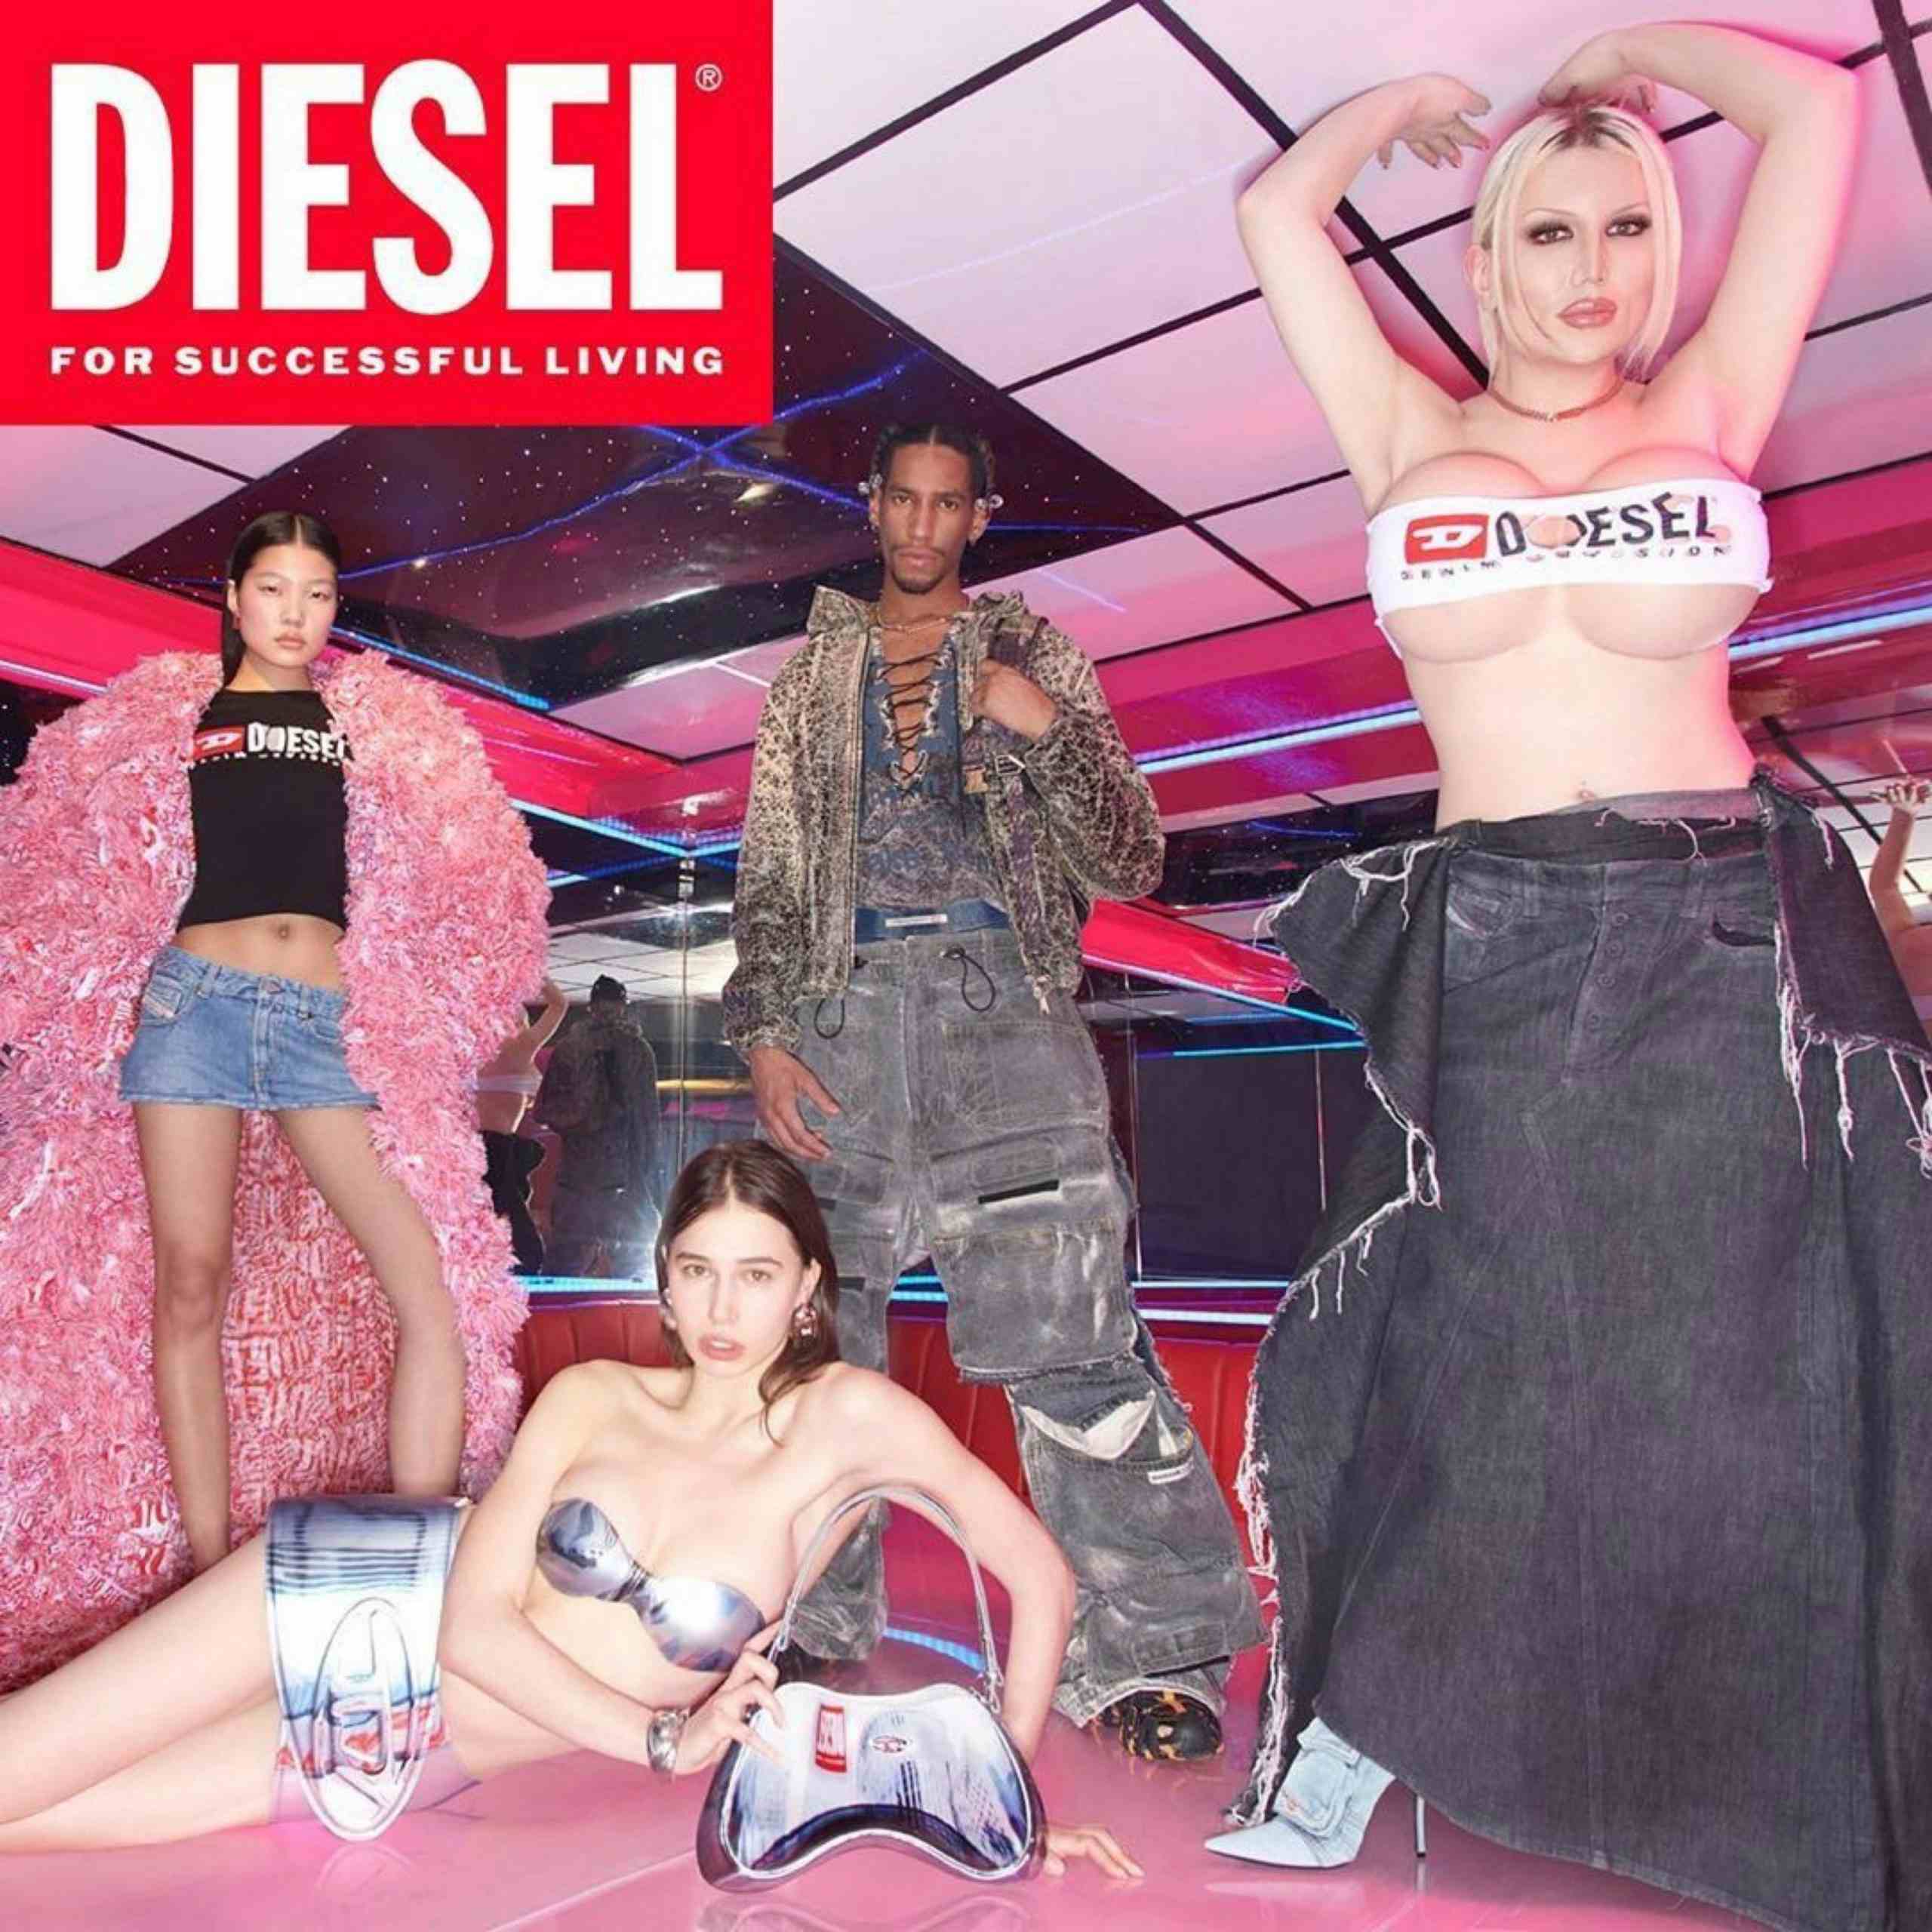 DIESEL - Diesel SS23 Campaign
Photographer: Johnny Dufort
